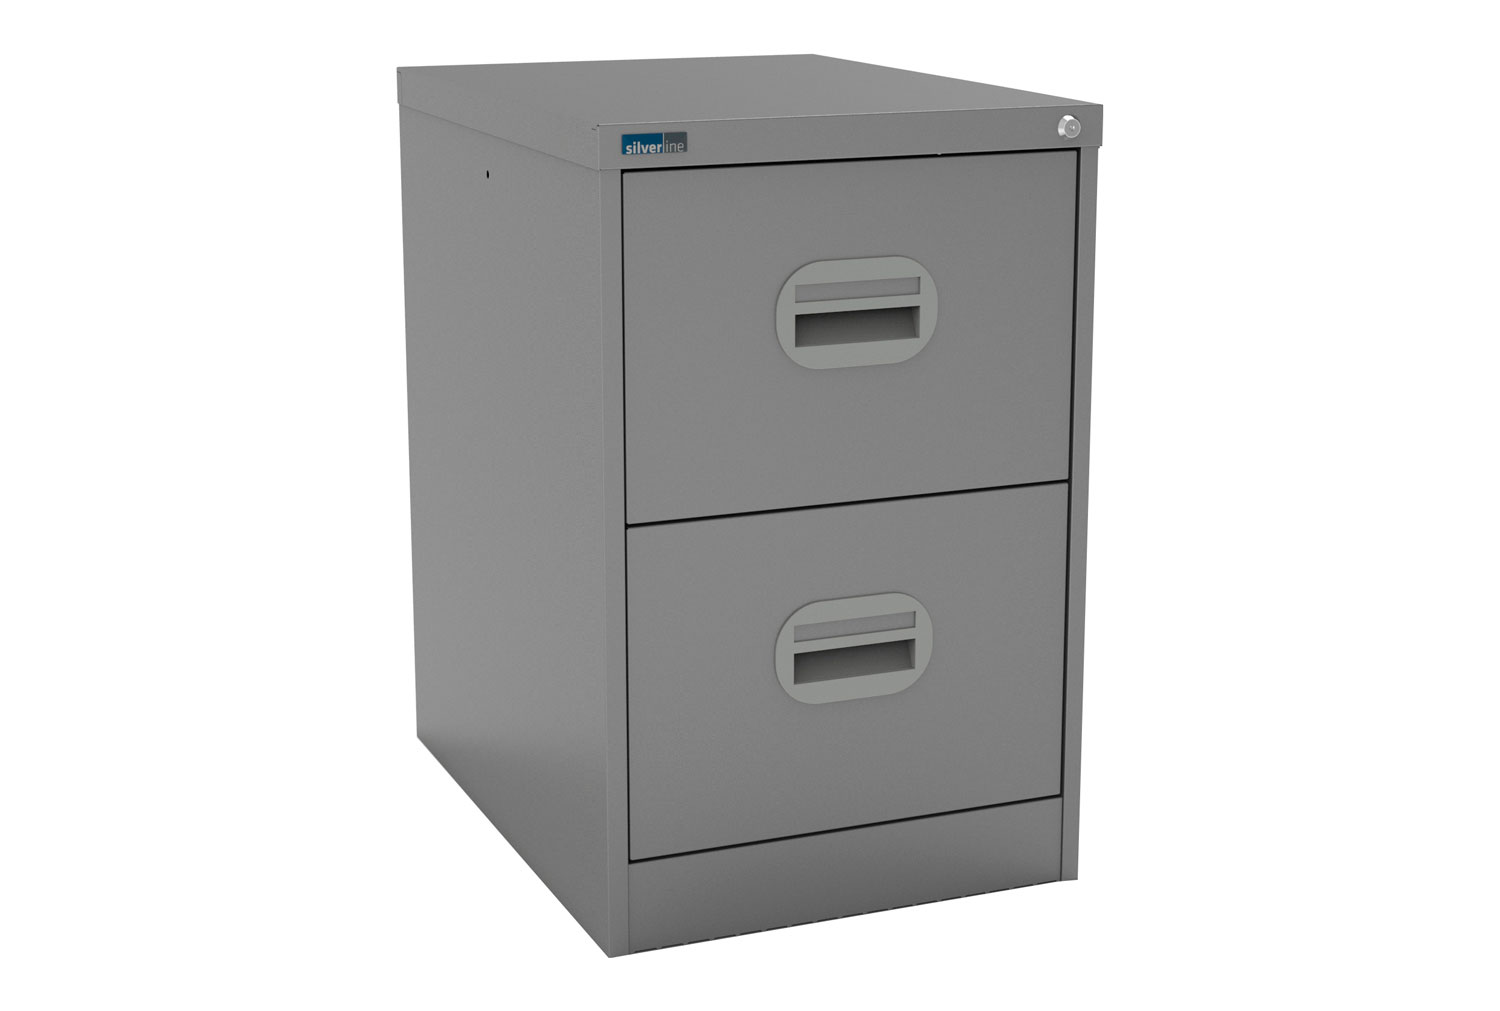 Silverline Kontrax 2 Drawer Filing Cabinet, 2 Drawer - 46wx62dx71h (cm), Silver